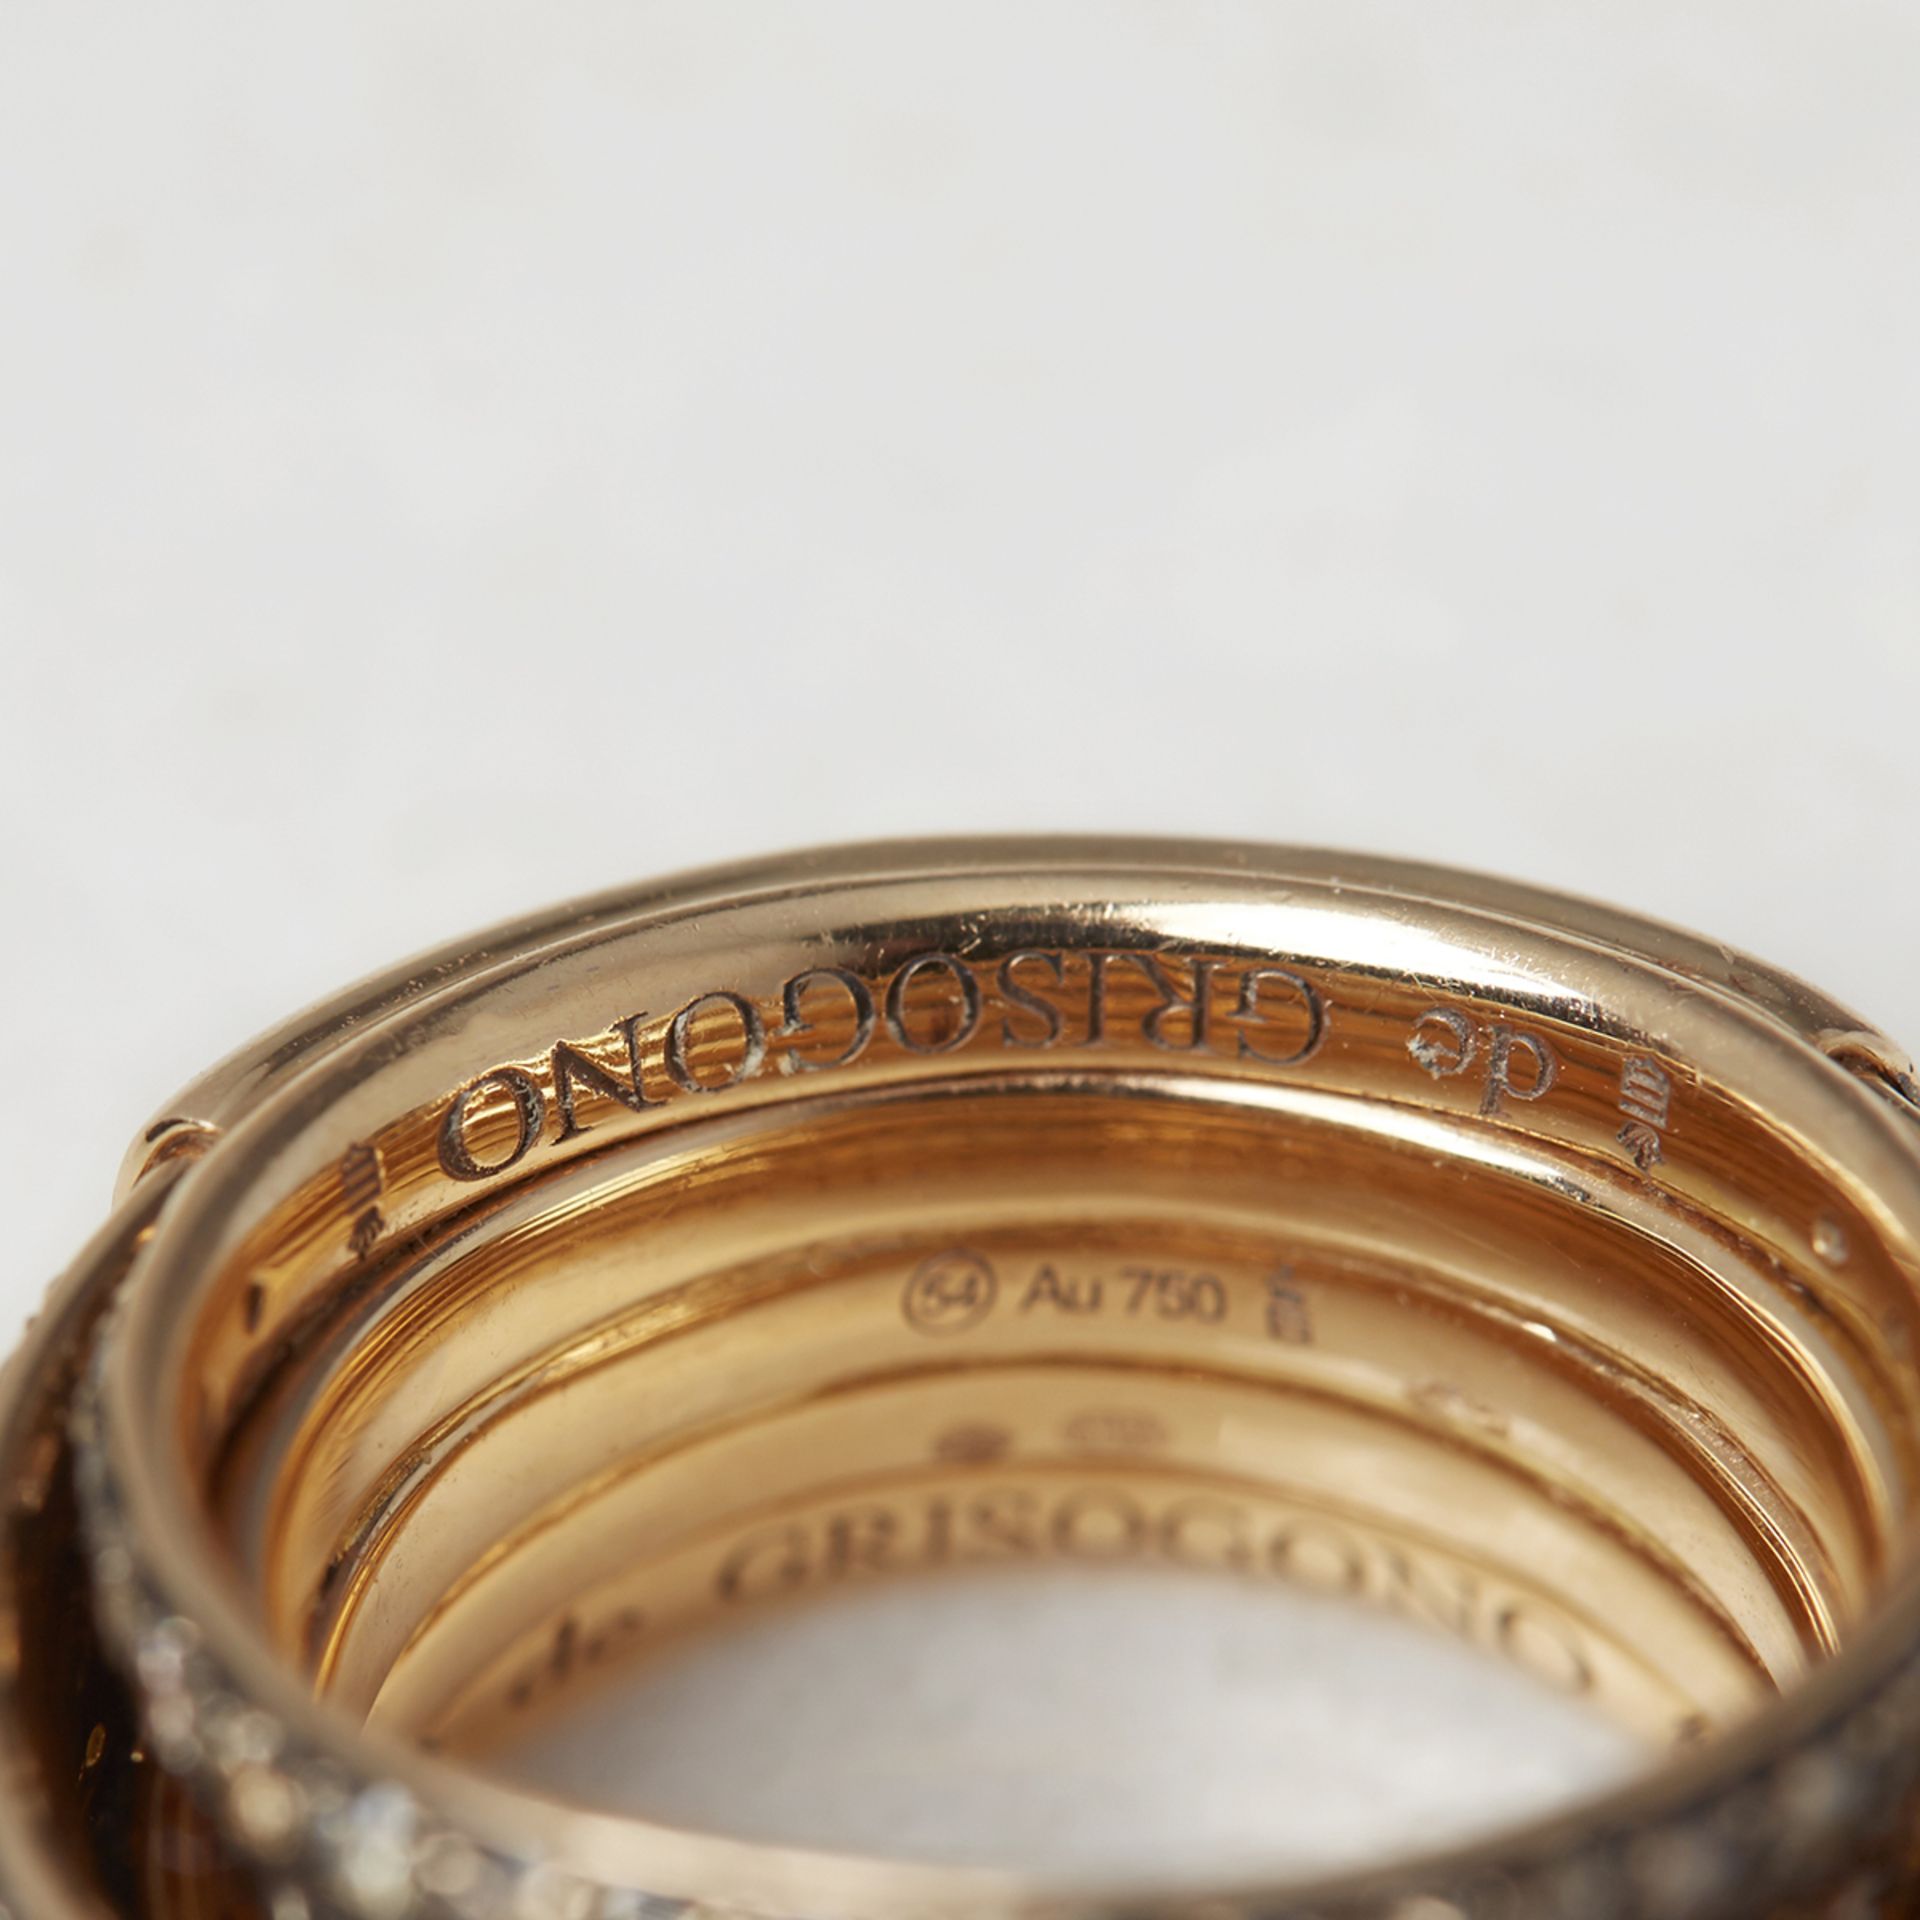 De Grisogono 18k Rose Gold 5.44ct Diamond Allegra Ring with De Grisogono Certificate of Authenticity - Image 12 of 12